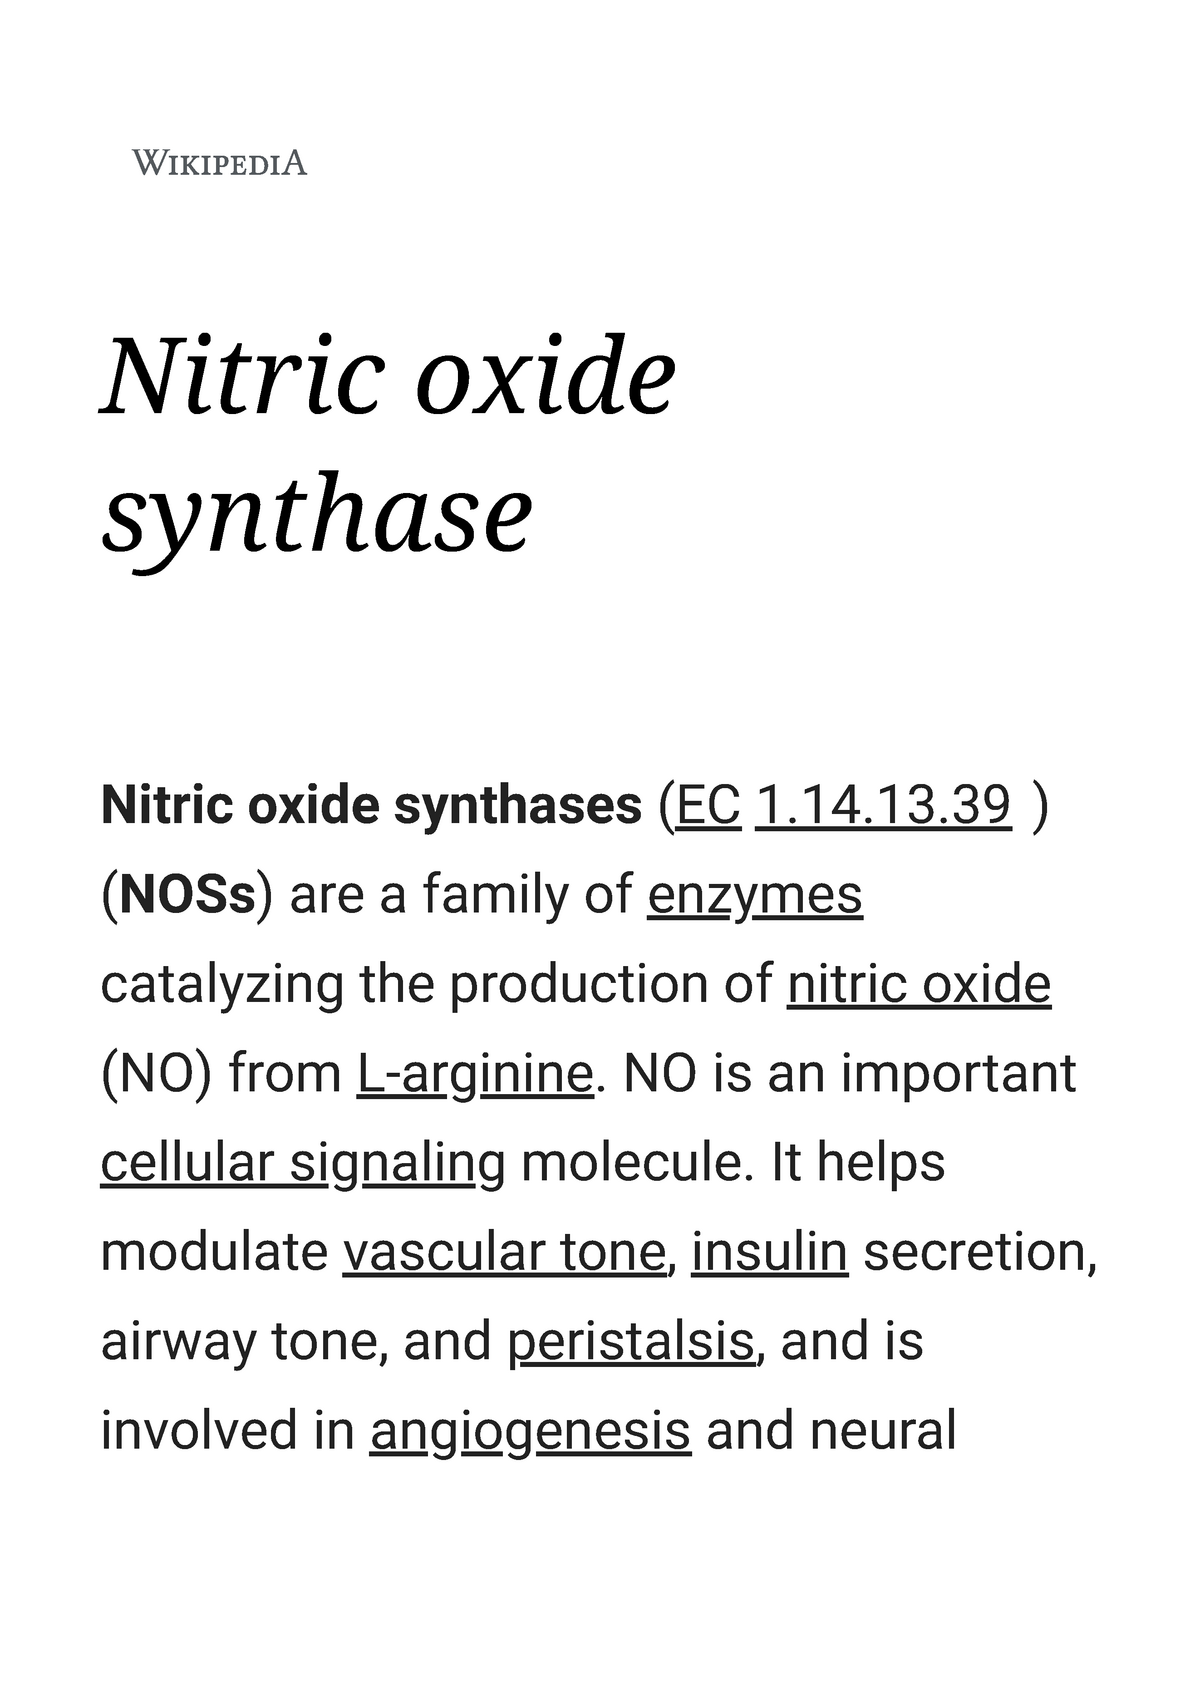 Nitric oxide - Wikipedia